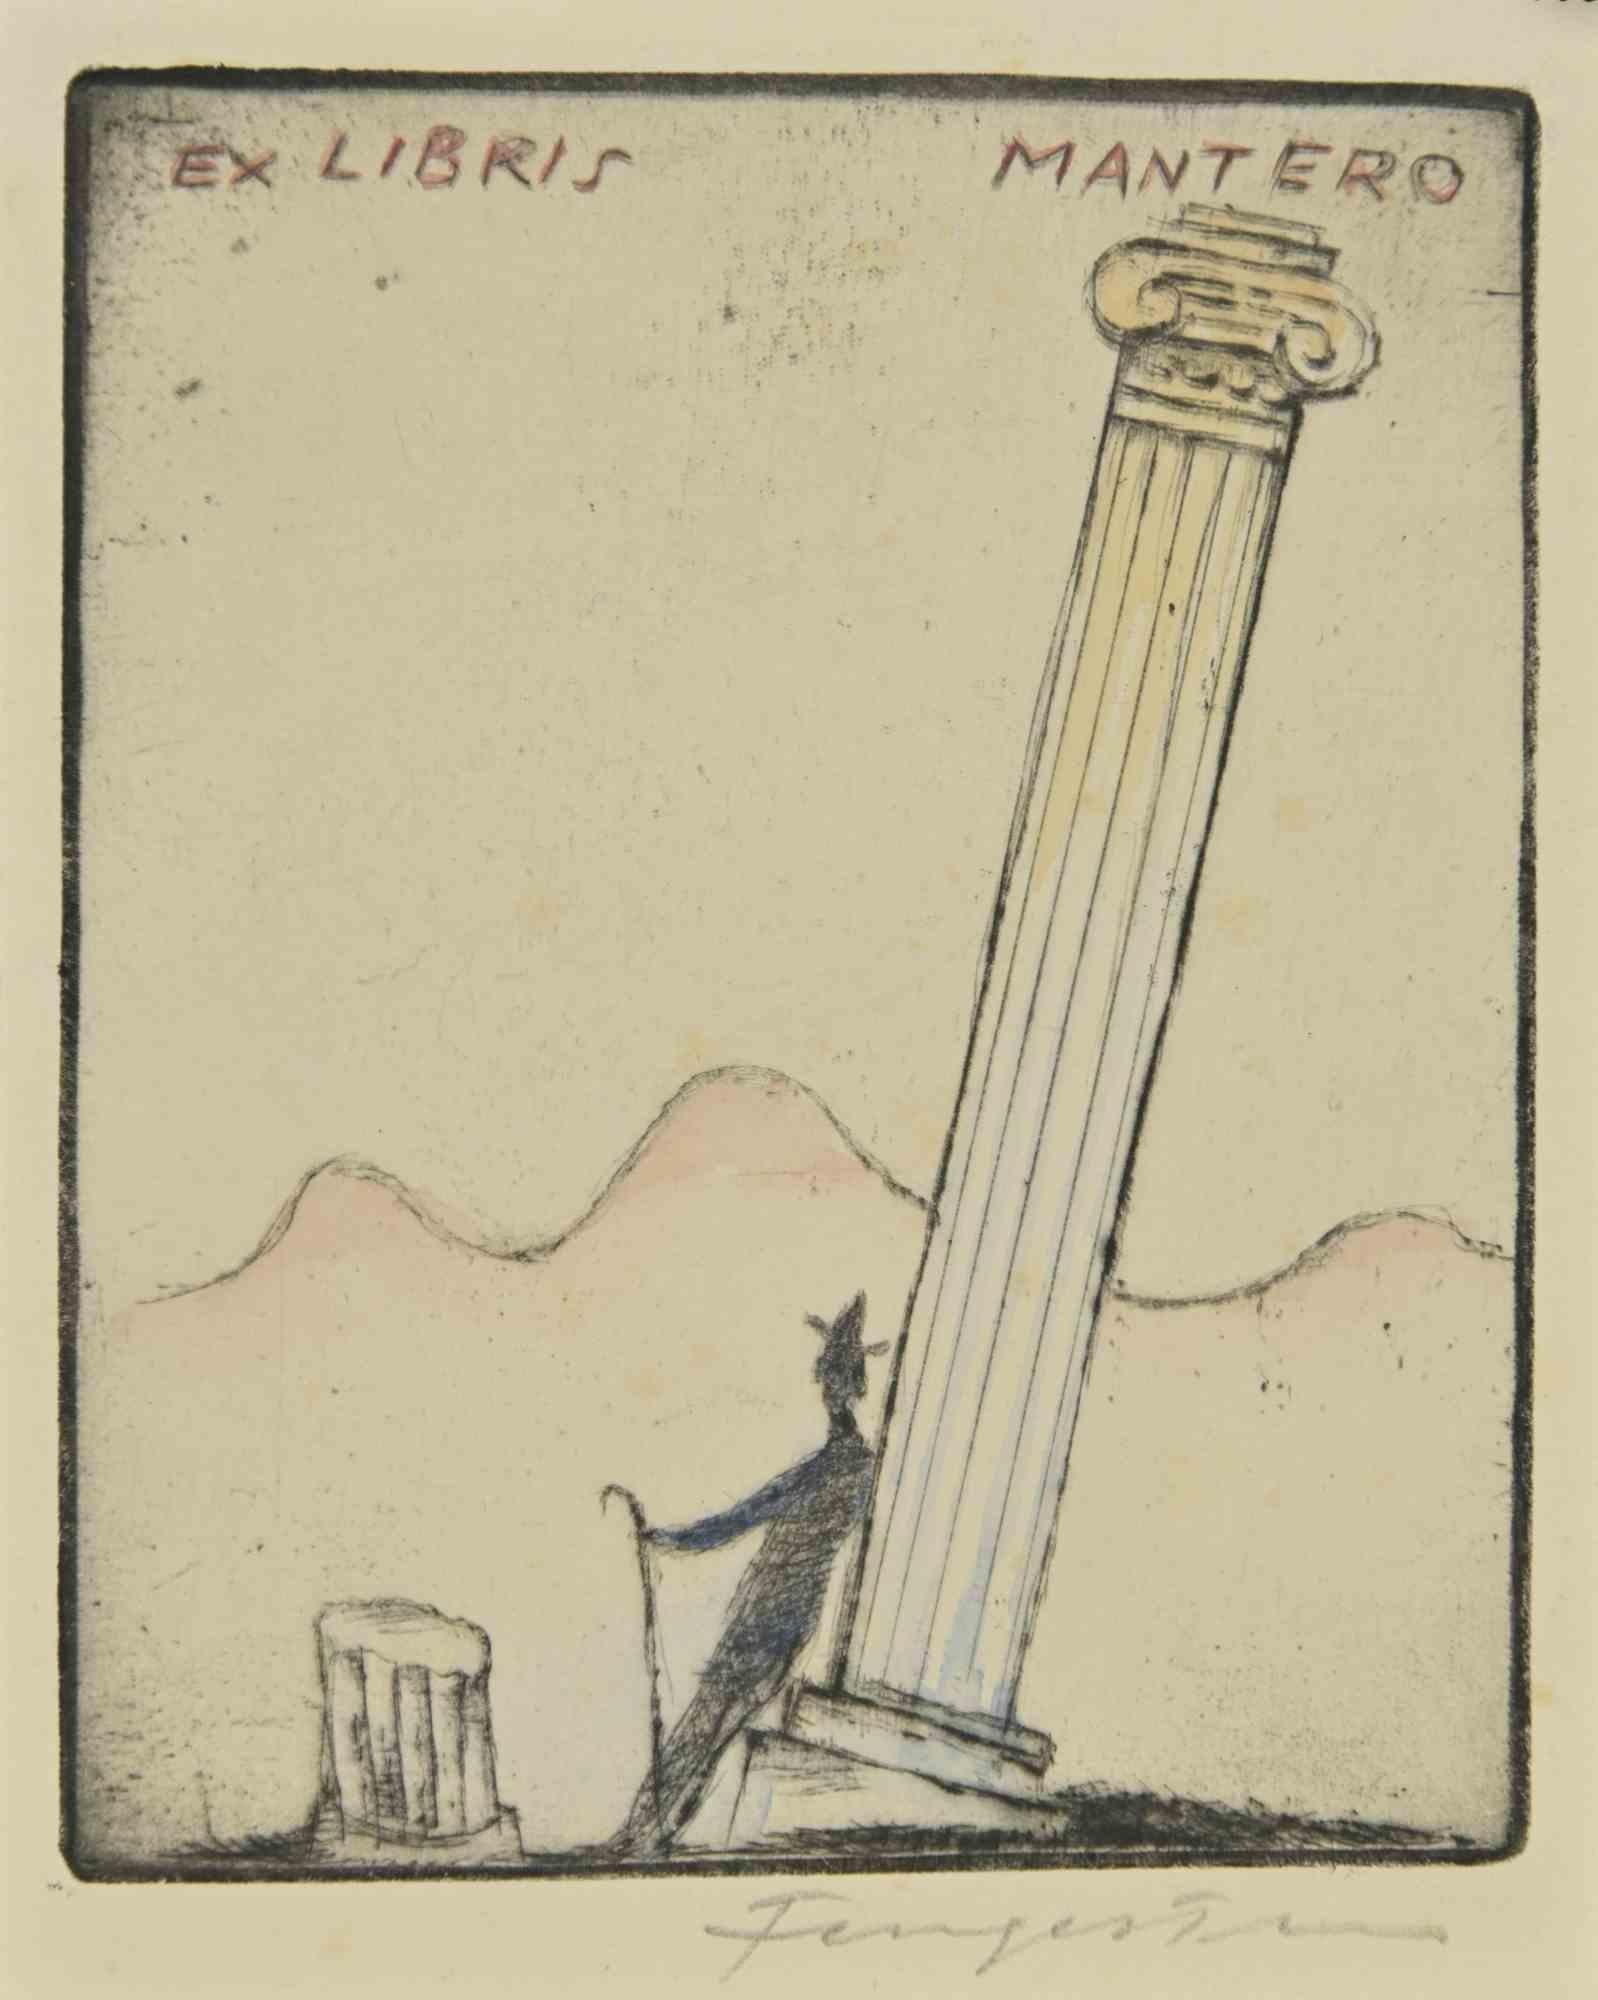 Ex Libris - Mantero - Woodcut by Michel Fingesten - 1930s